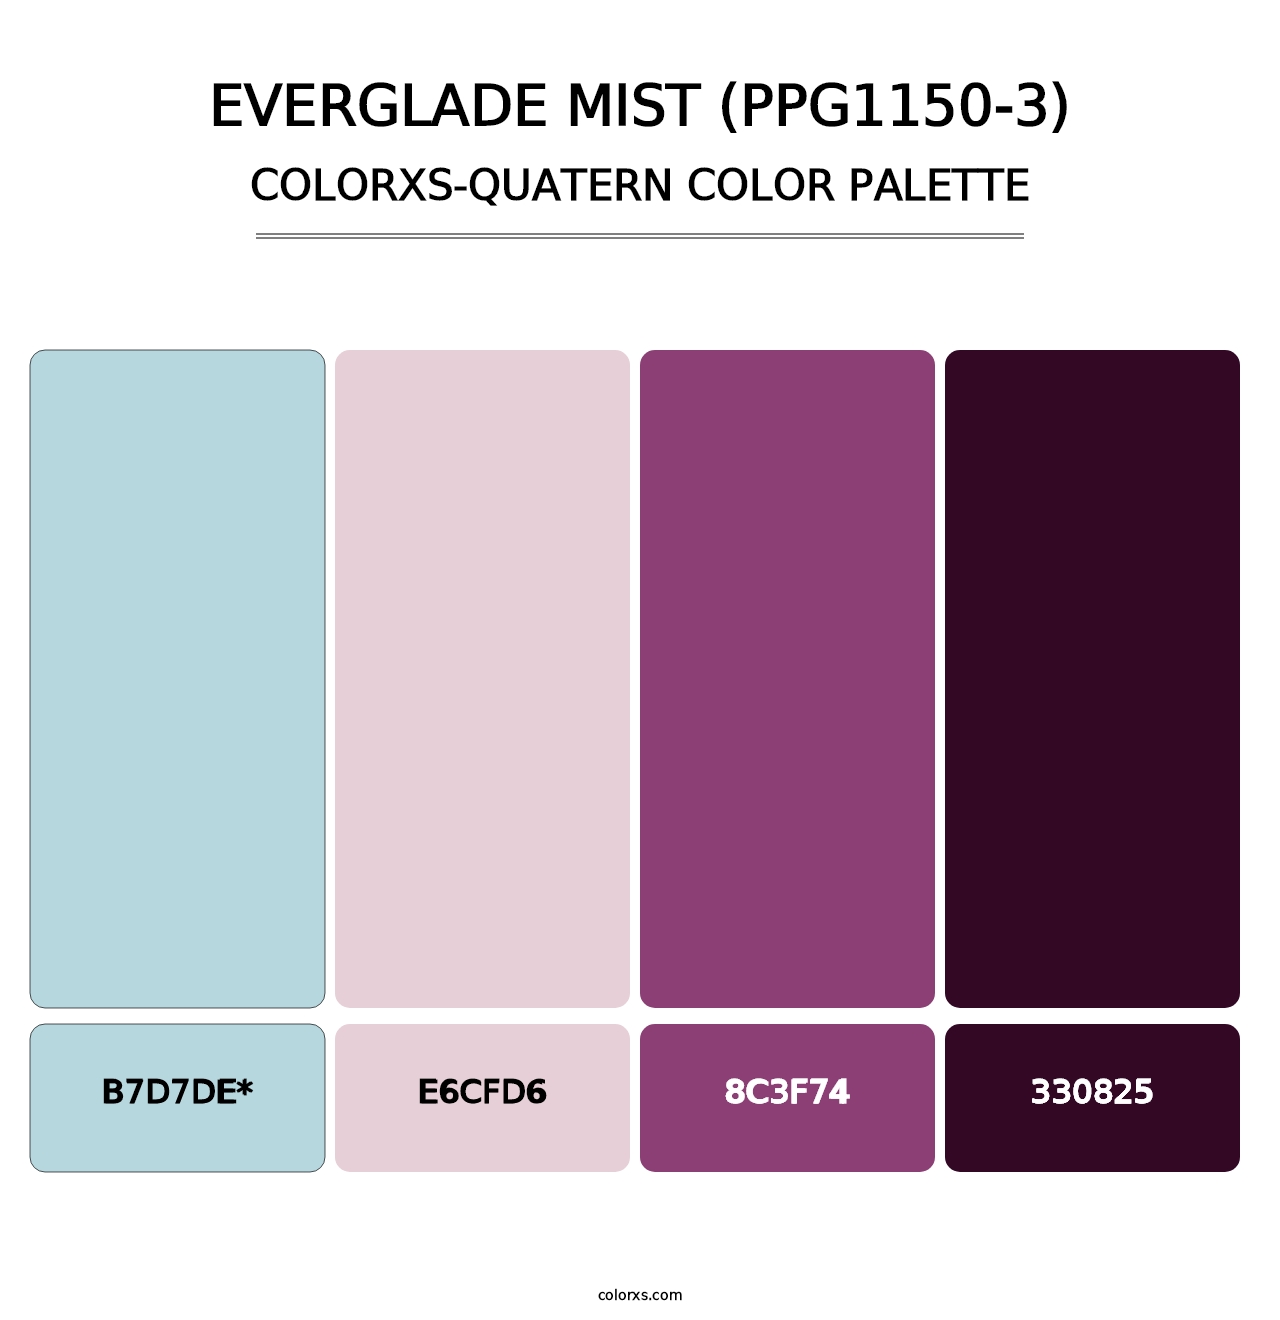 Everglade Mist (PPG1150-3) - Colorxs Quatern Palette